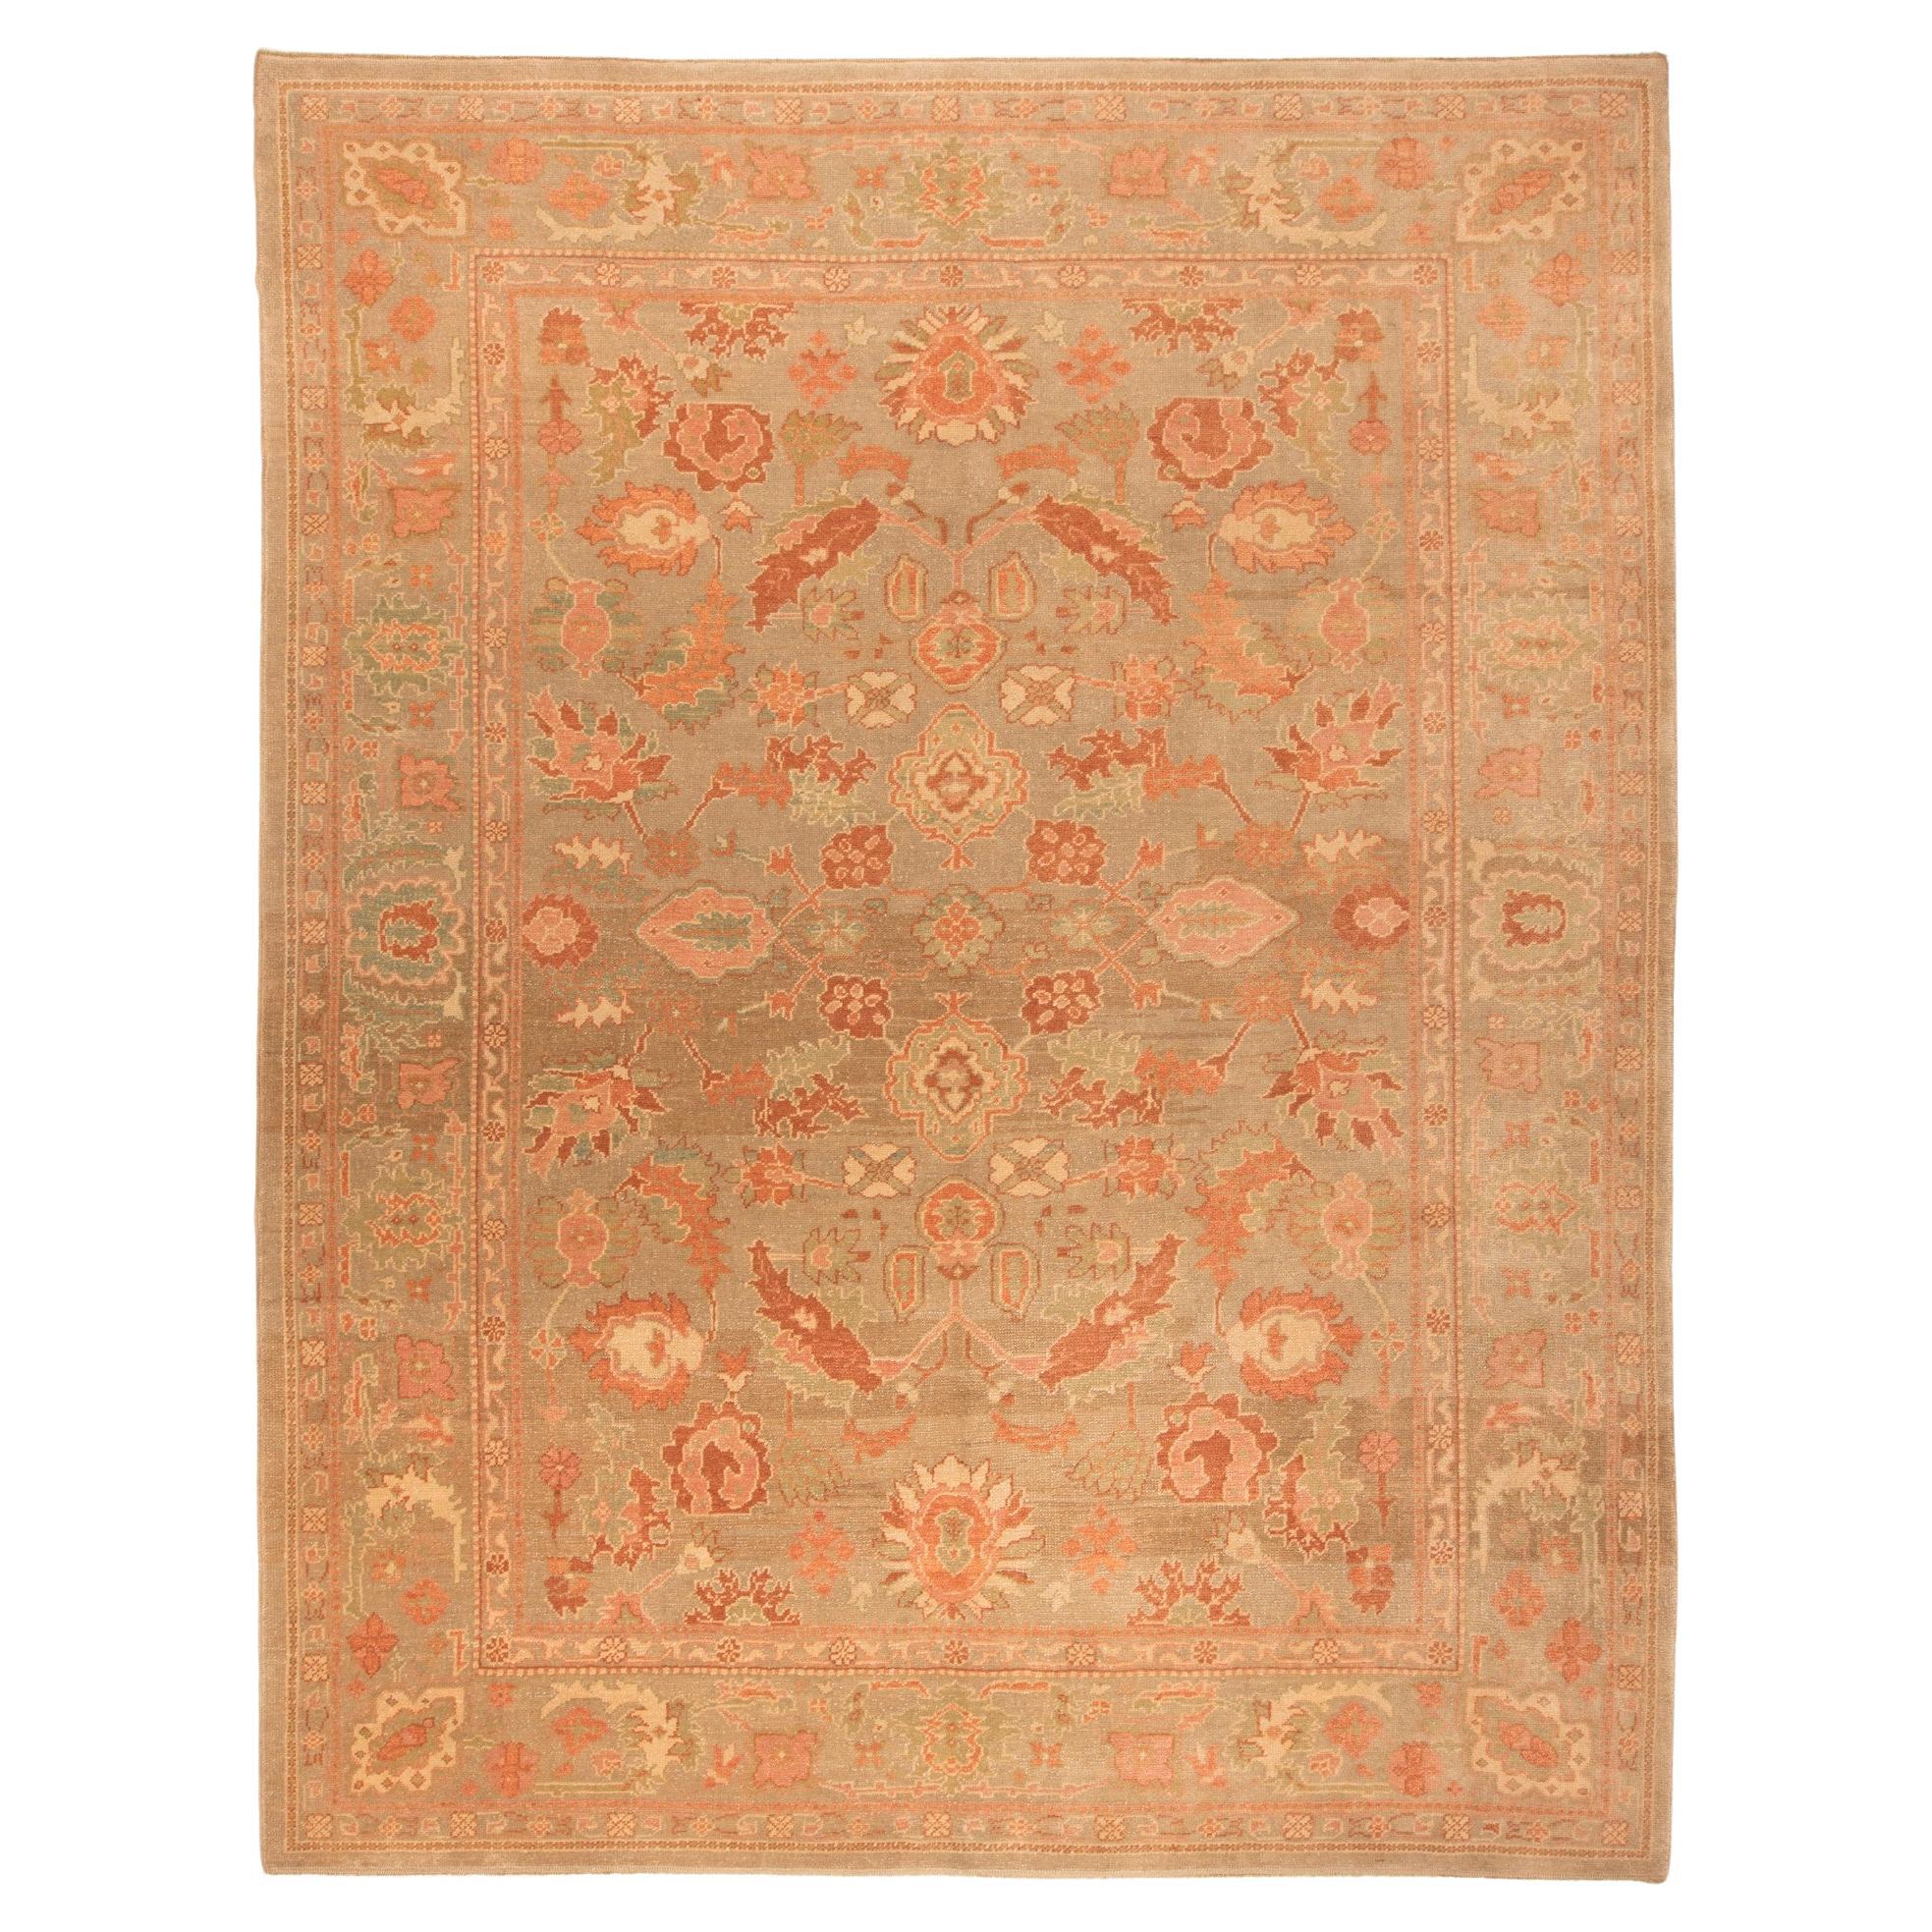 Ararat Rugs Oushak Palmette Lattice Rug, Turkish Revival Carpet, Natural Dyed For Sale